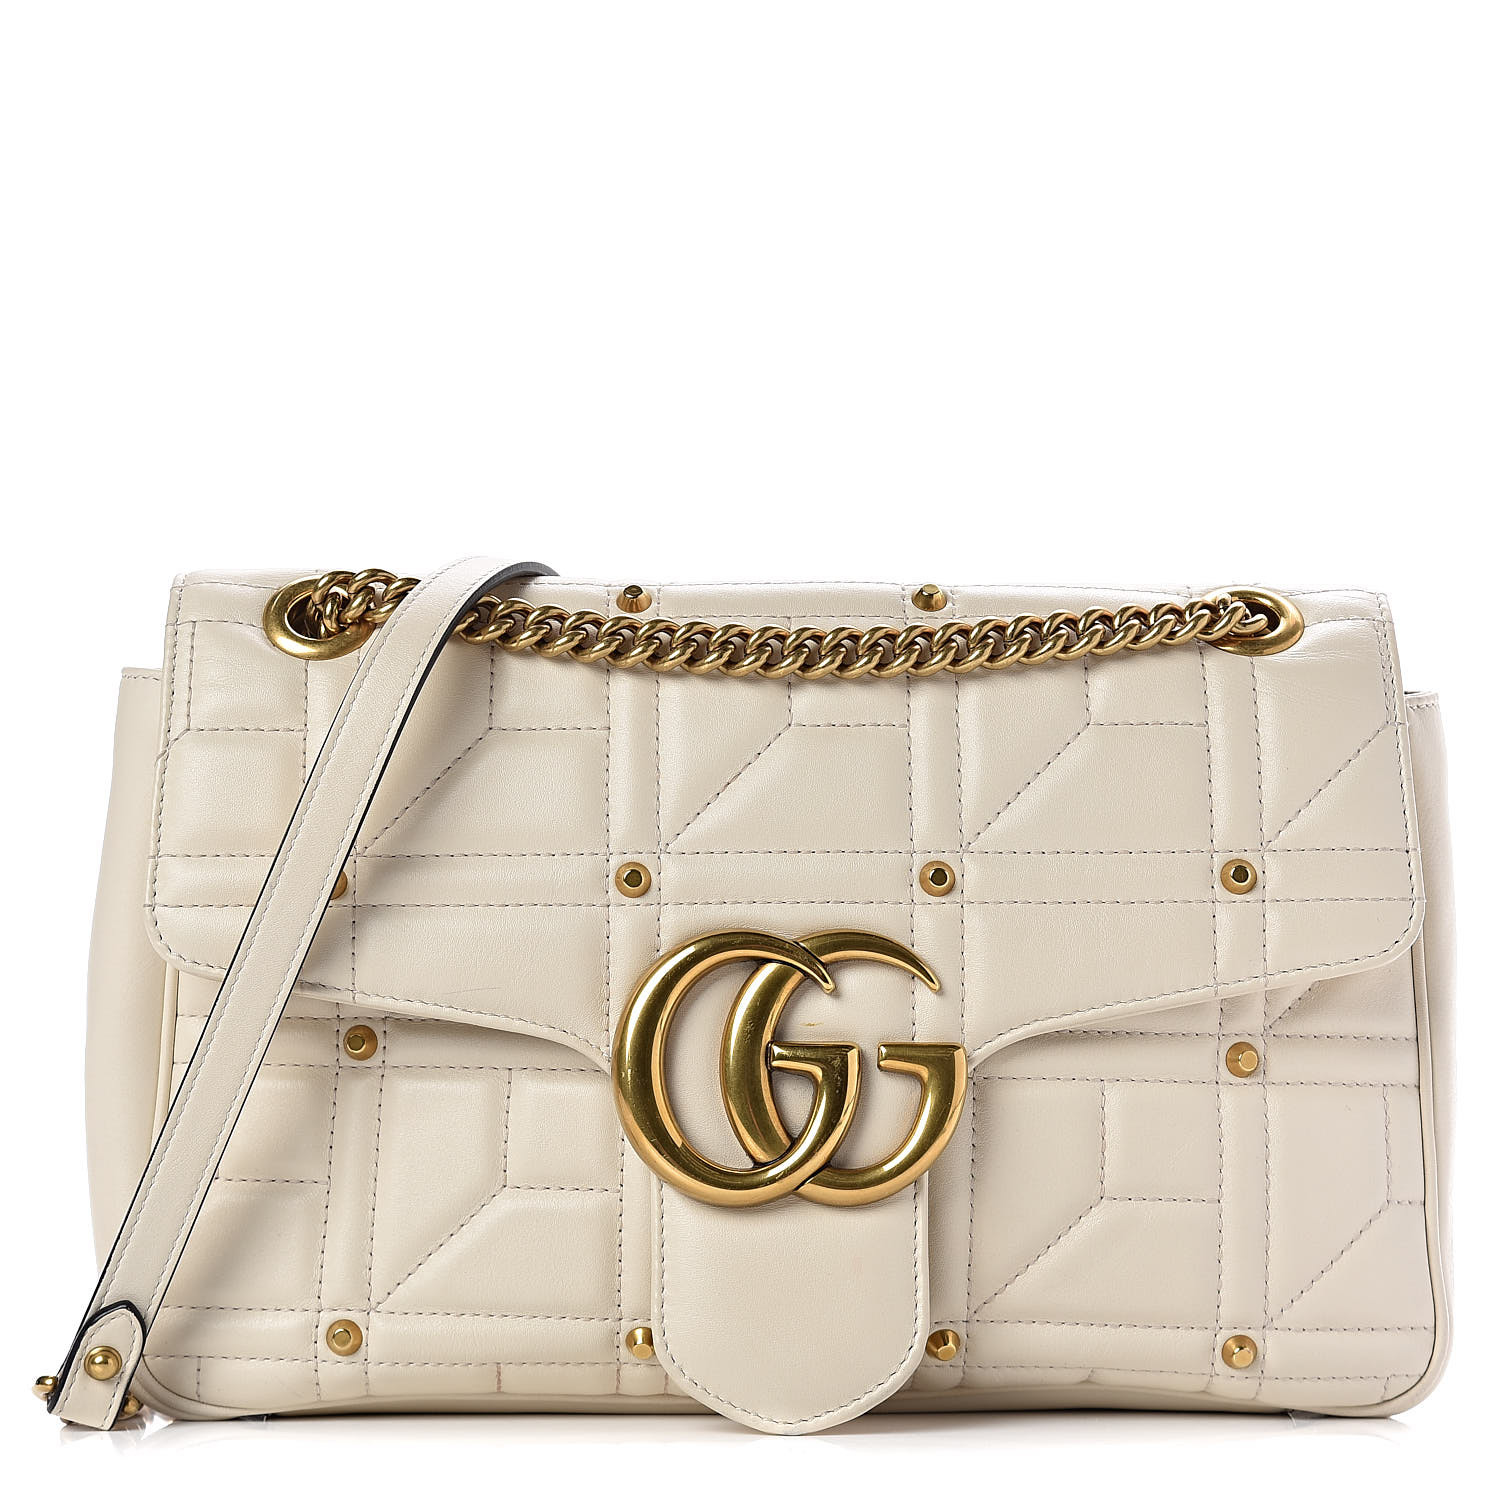 GUCCI Calfskin Matelasse Studded Medium GG Marmont Shoulder Bag White 505136